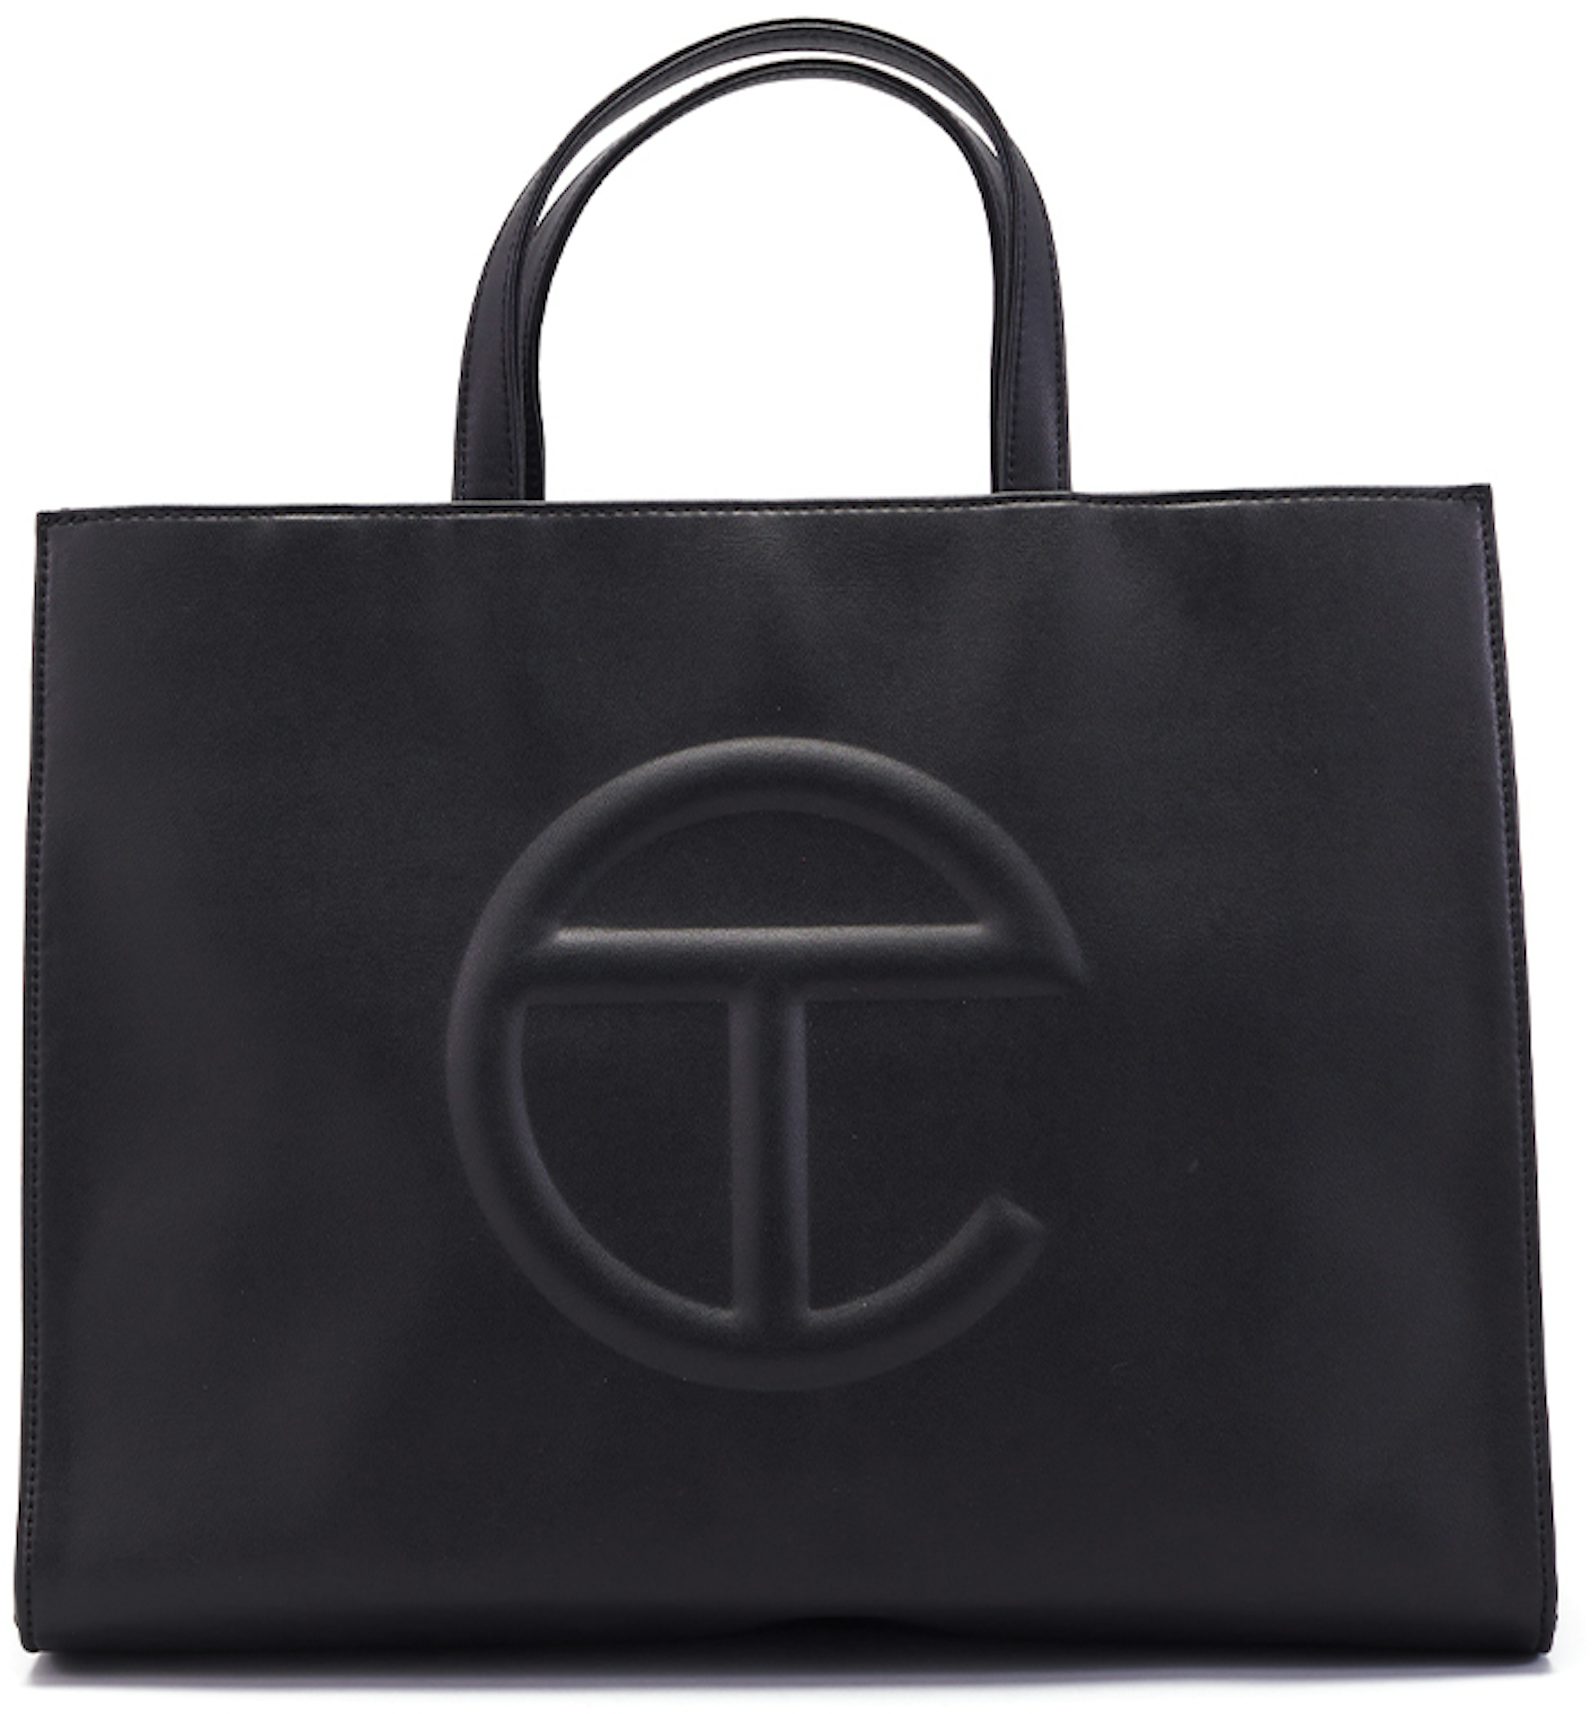 Medium Shopping Bag - Black